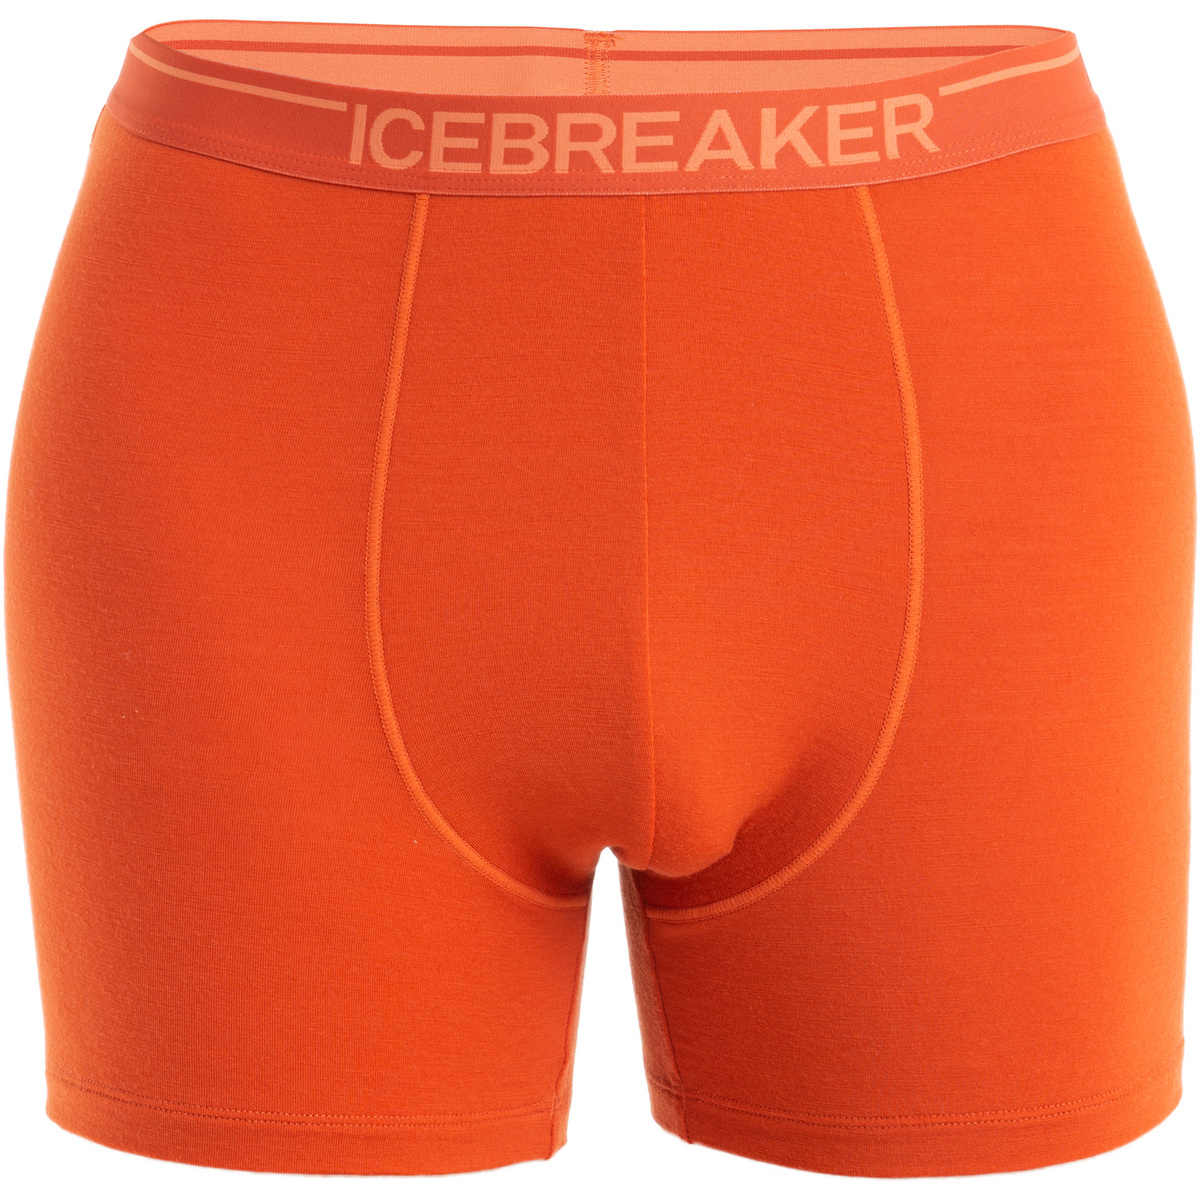 Image of Icebreaker Uomo Boxer Anatomica